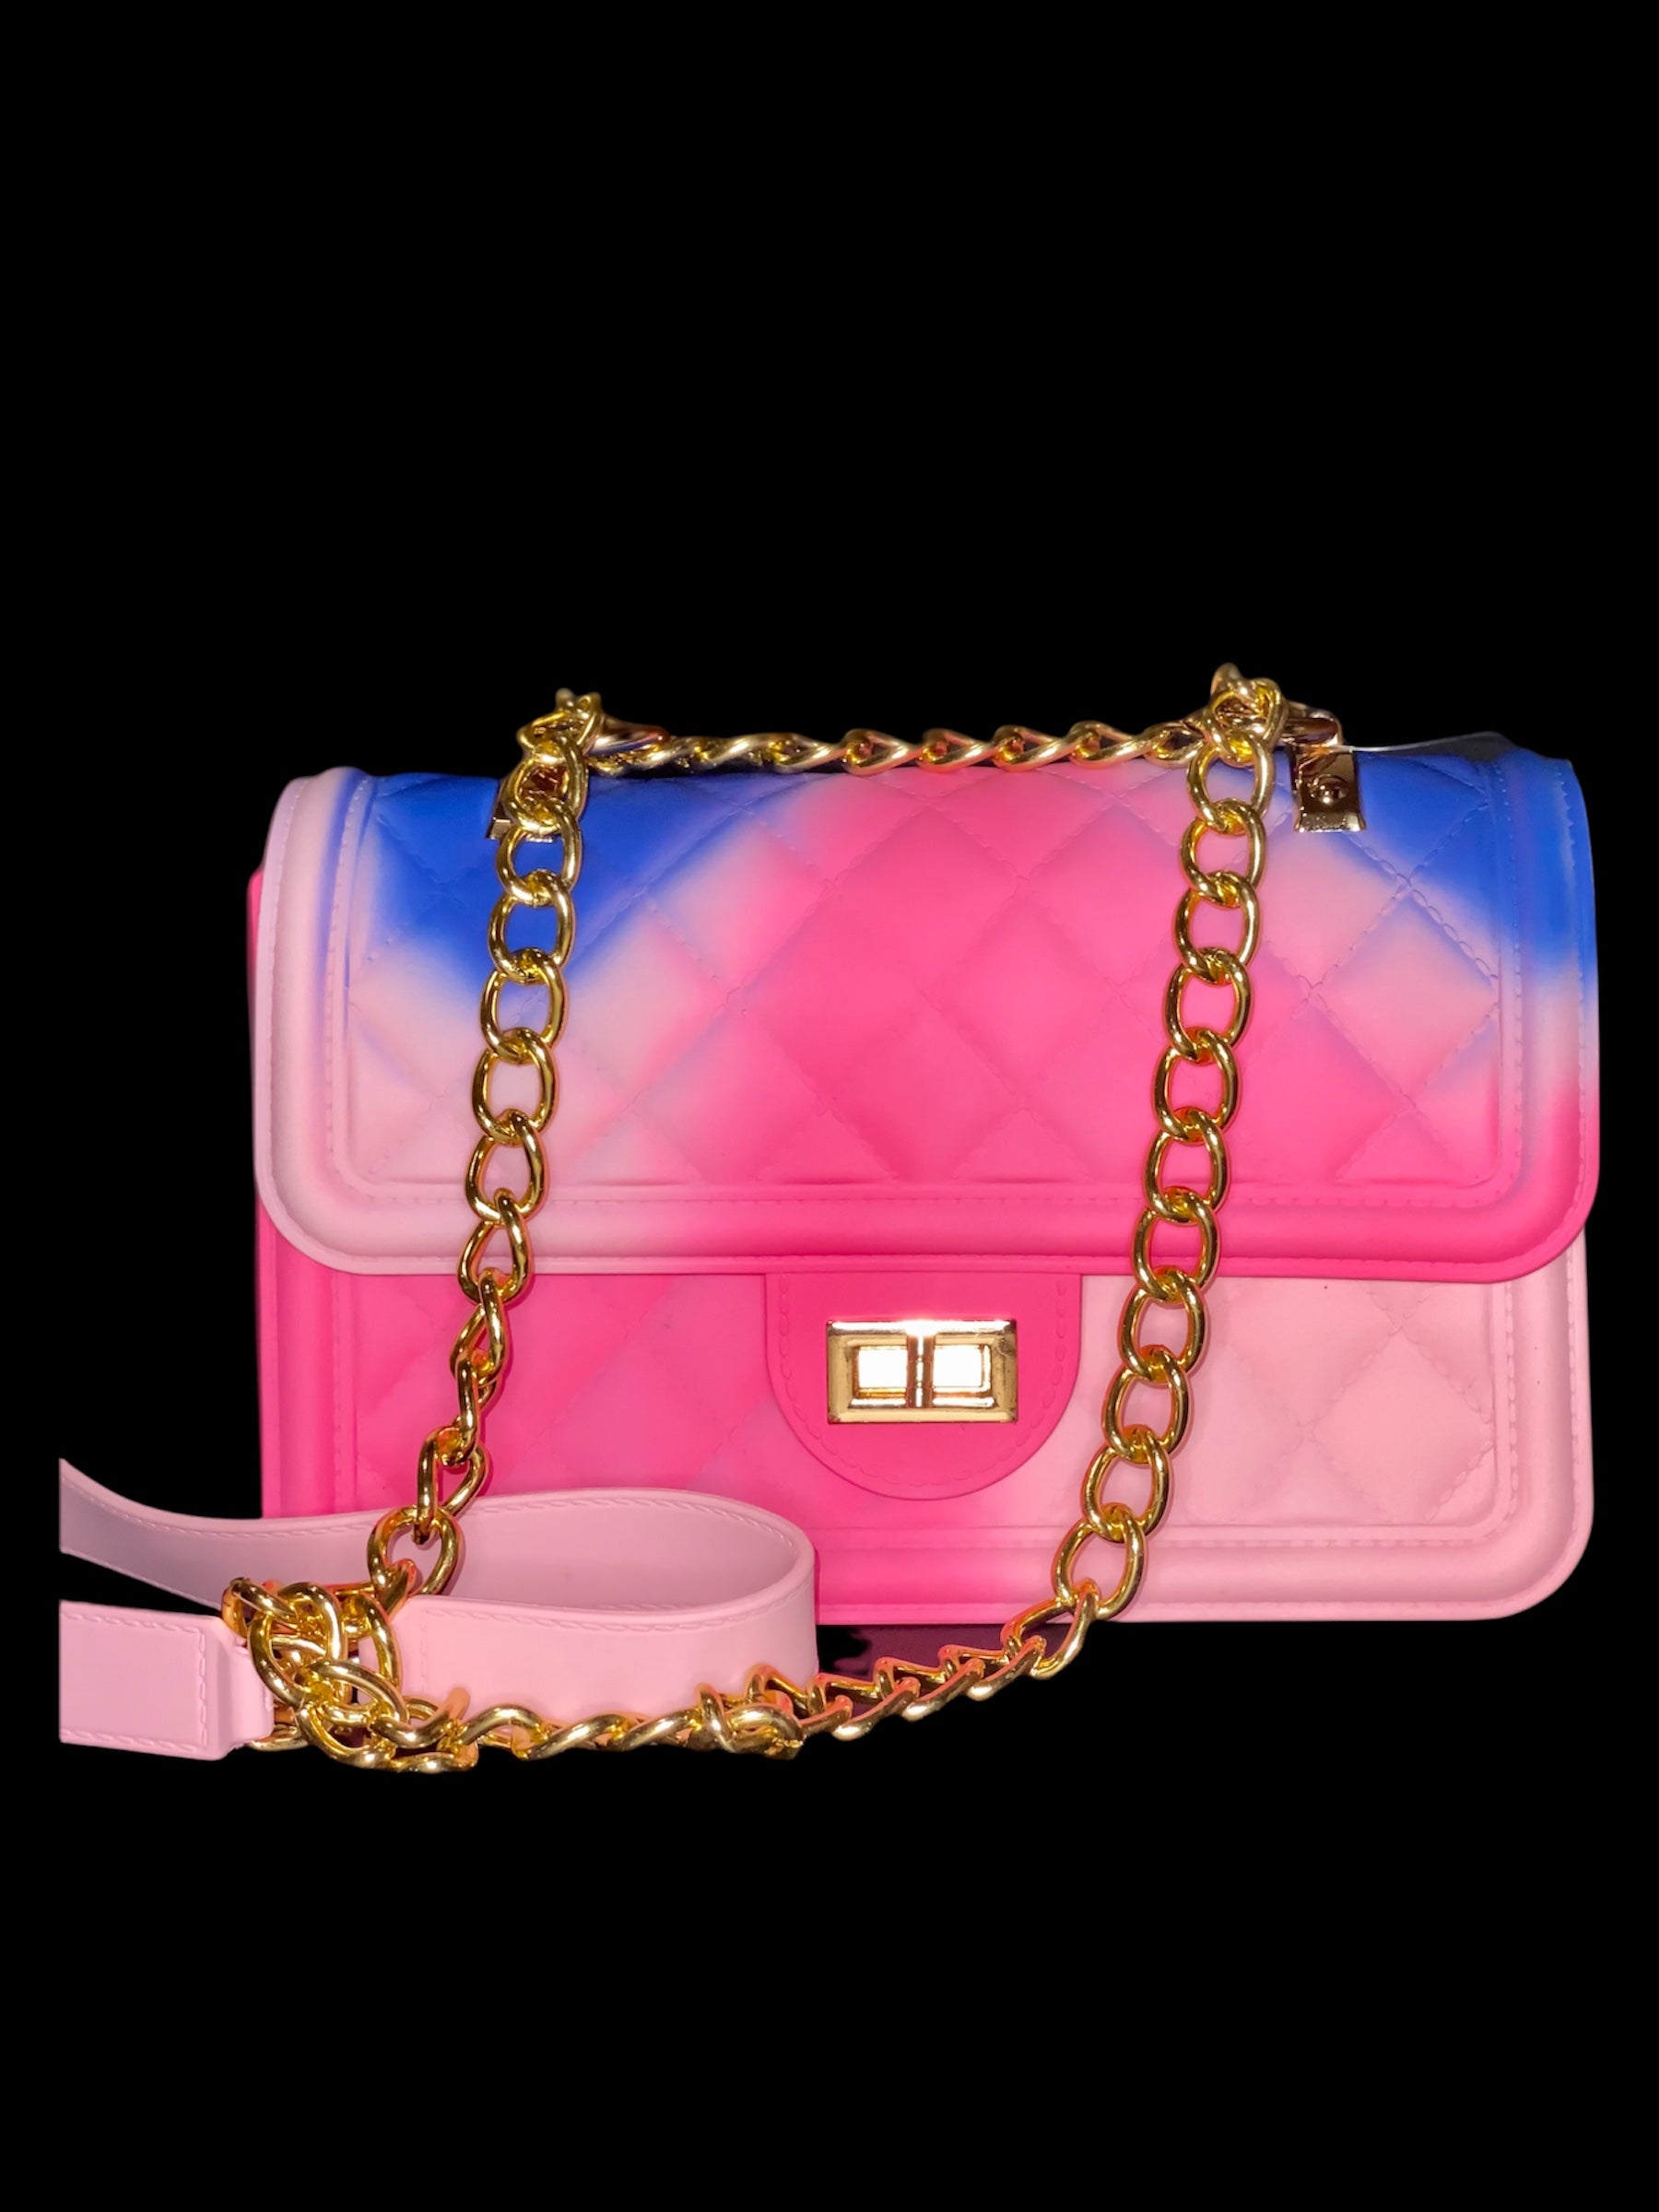 Rainbow Jelly Bag Mini Satchel Crossbody Women Purse Handbags by Soulfina  (Multi-I) : Amazon.in: Shoes & Handbags